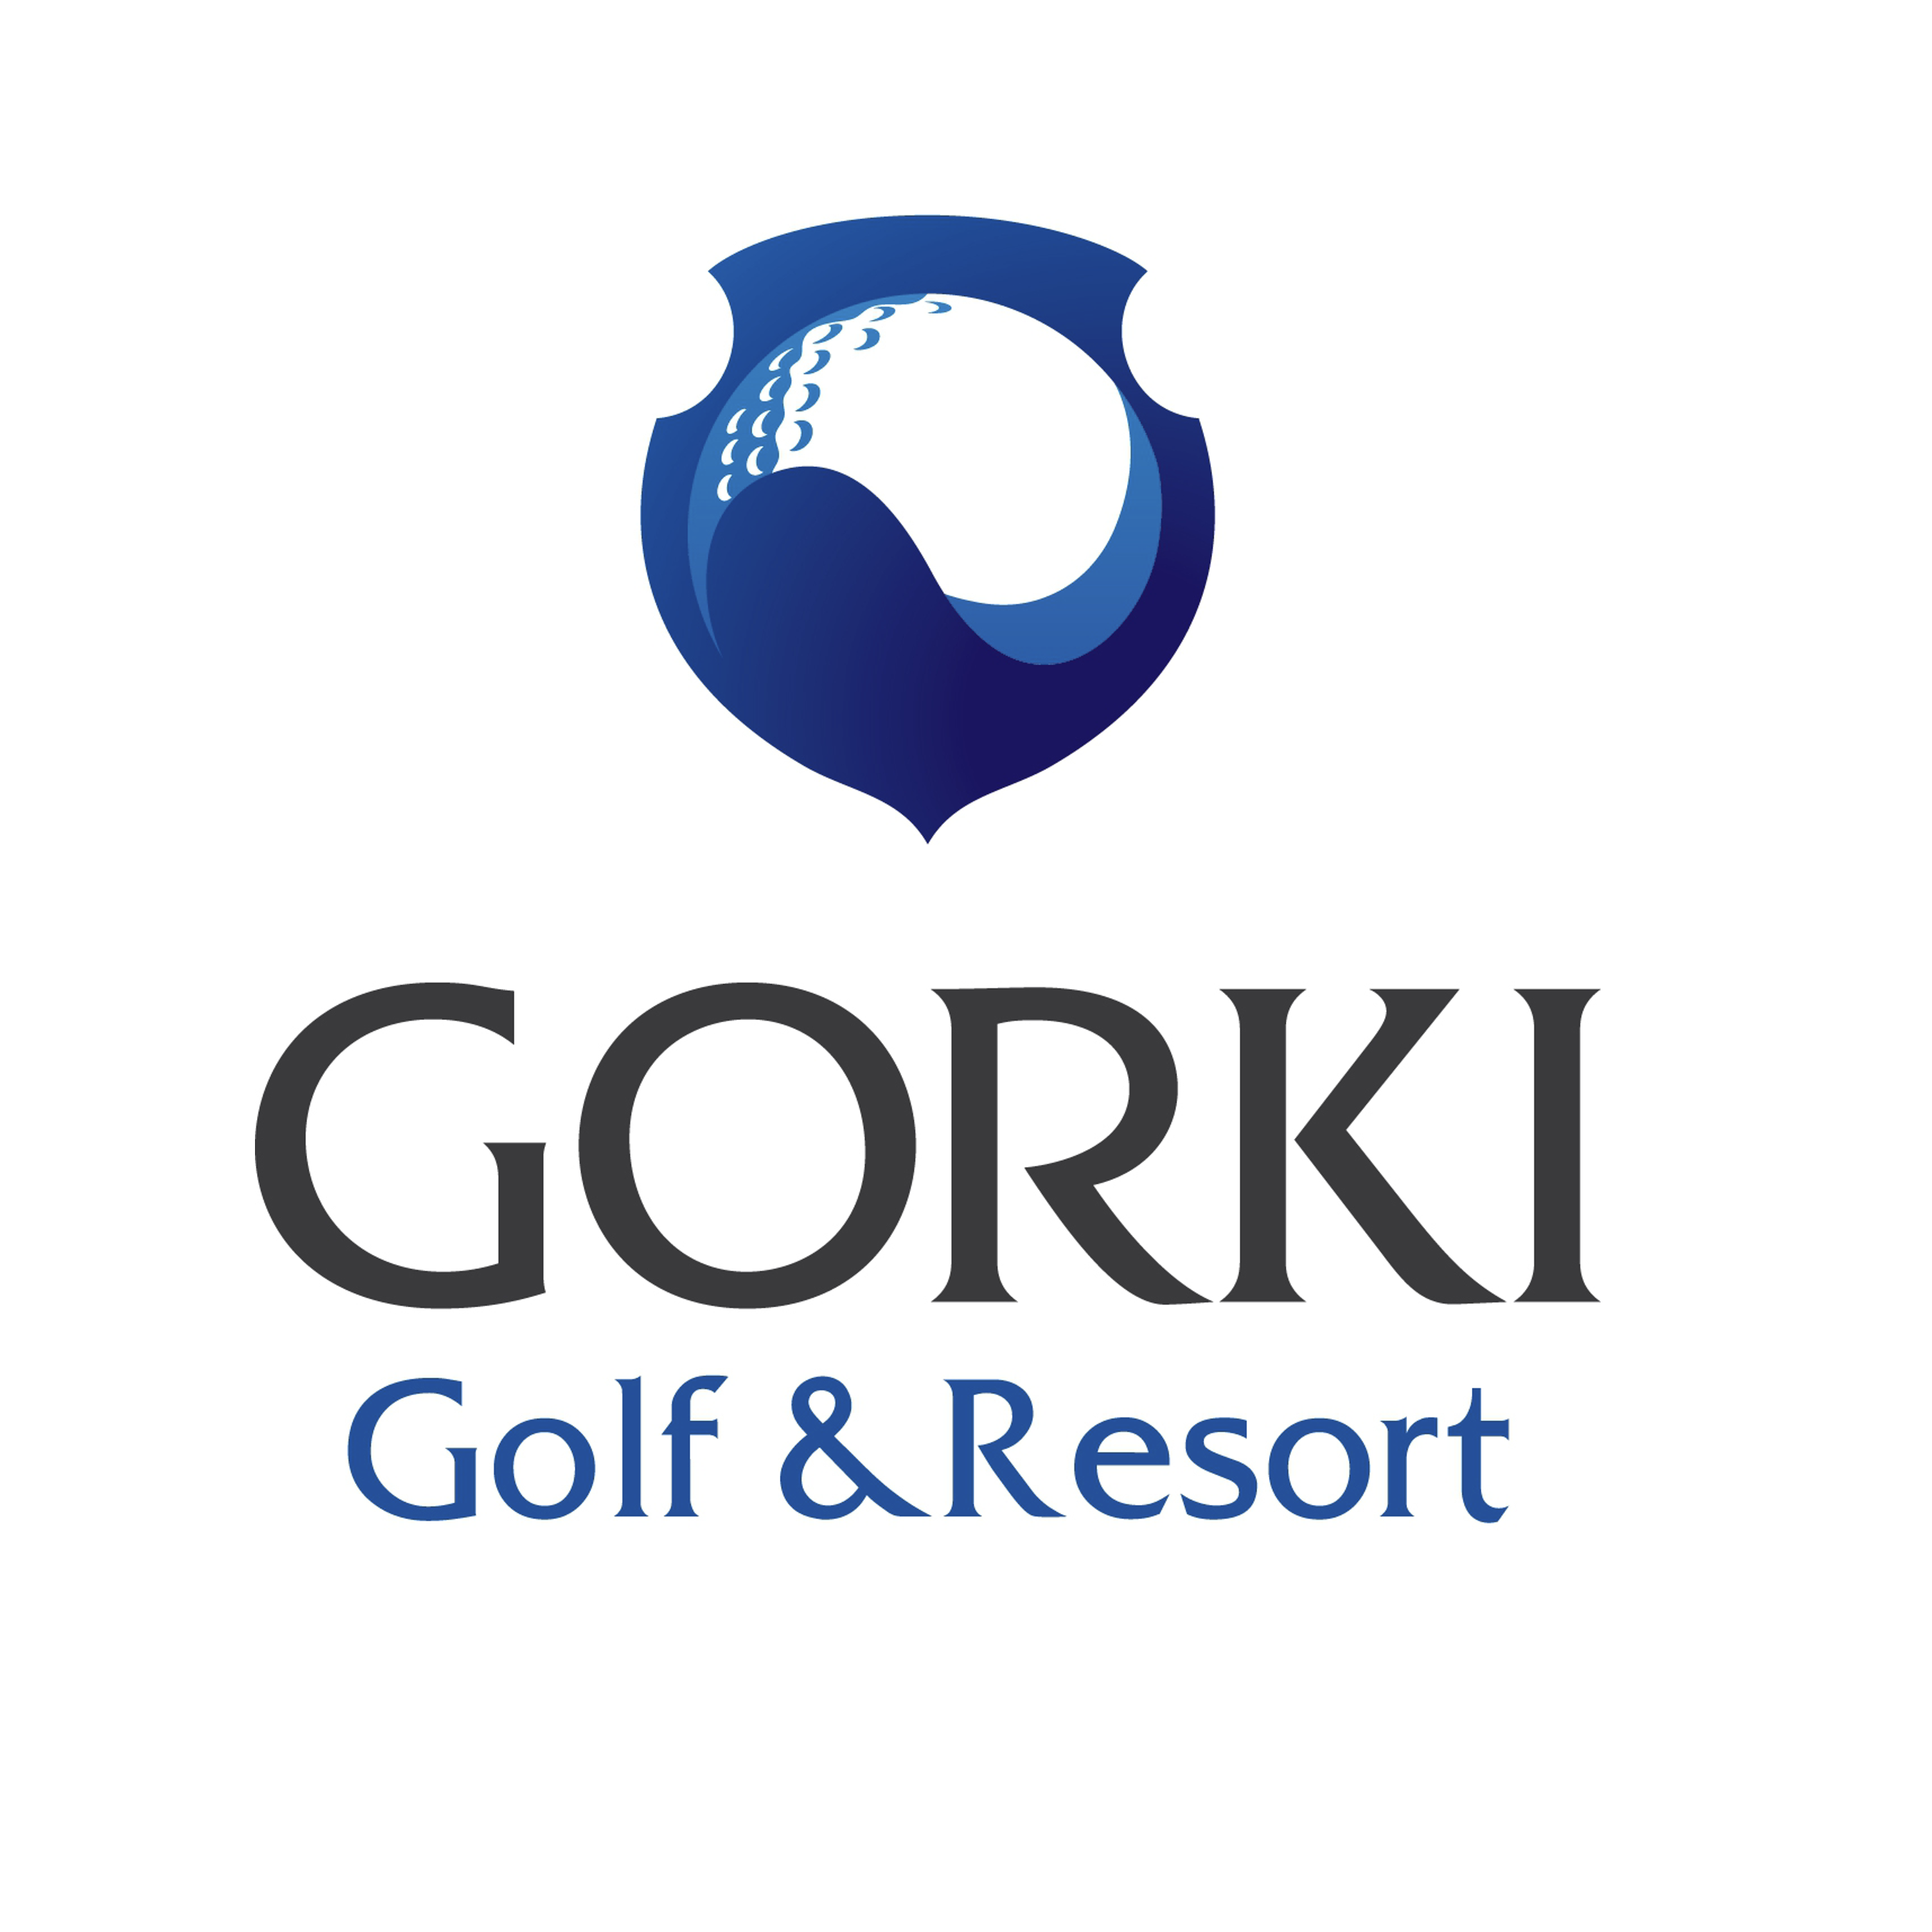 Gorki Golf & Resort